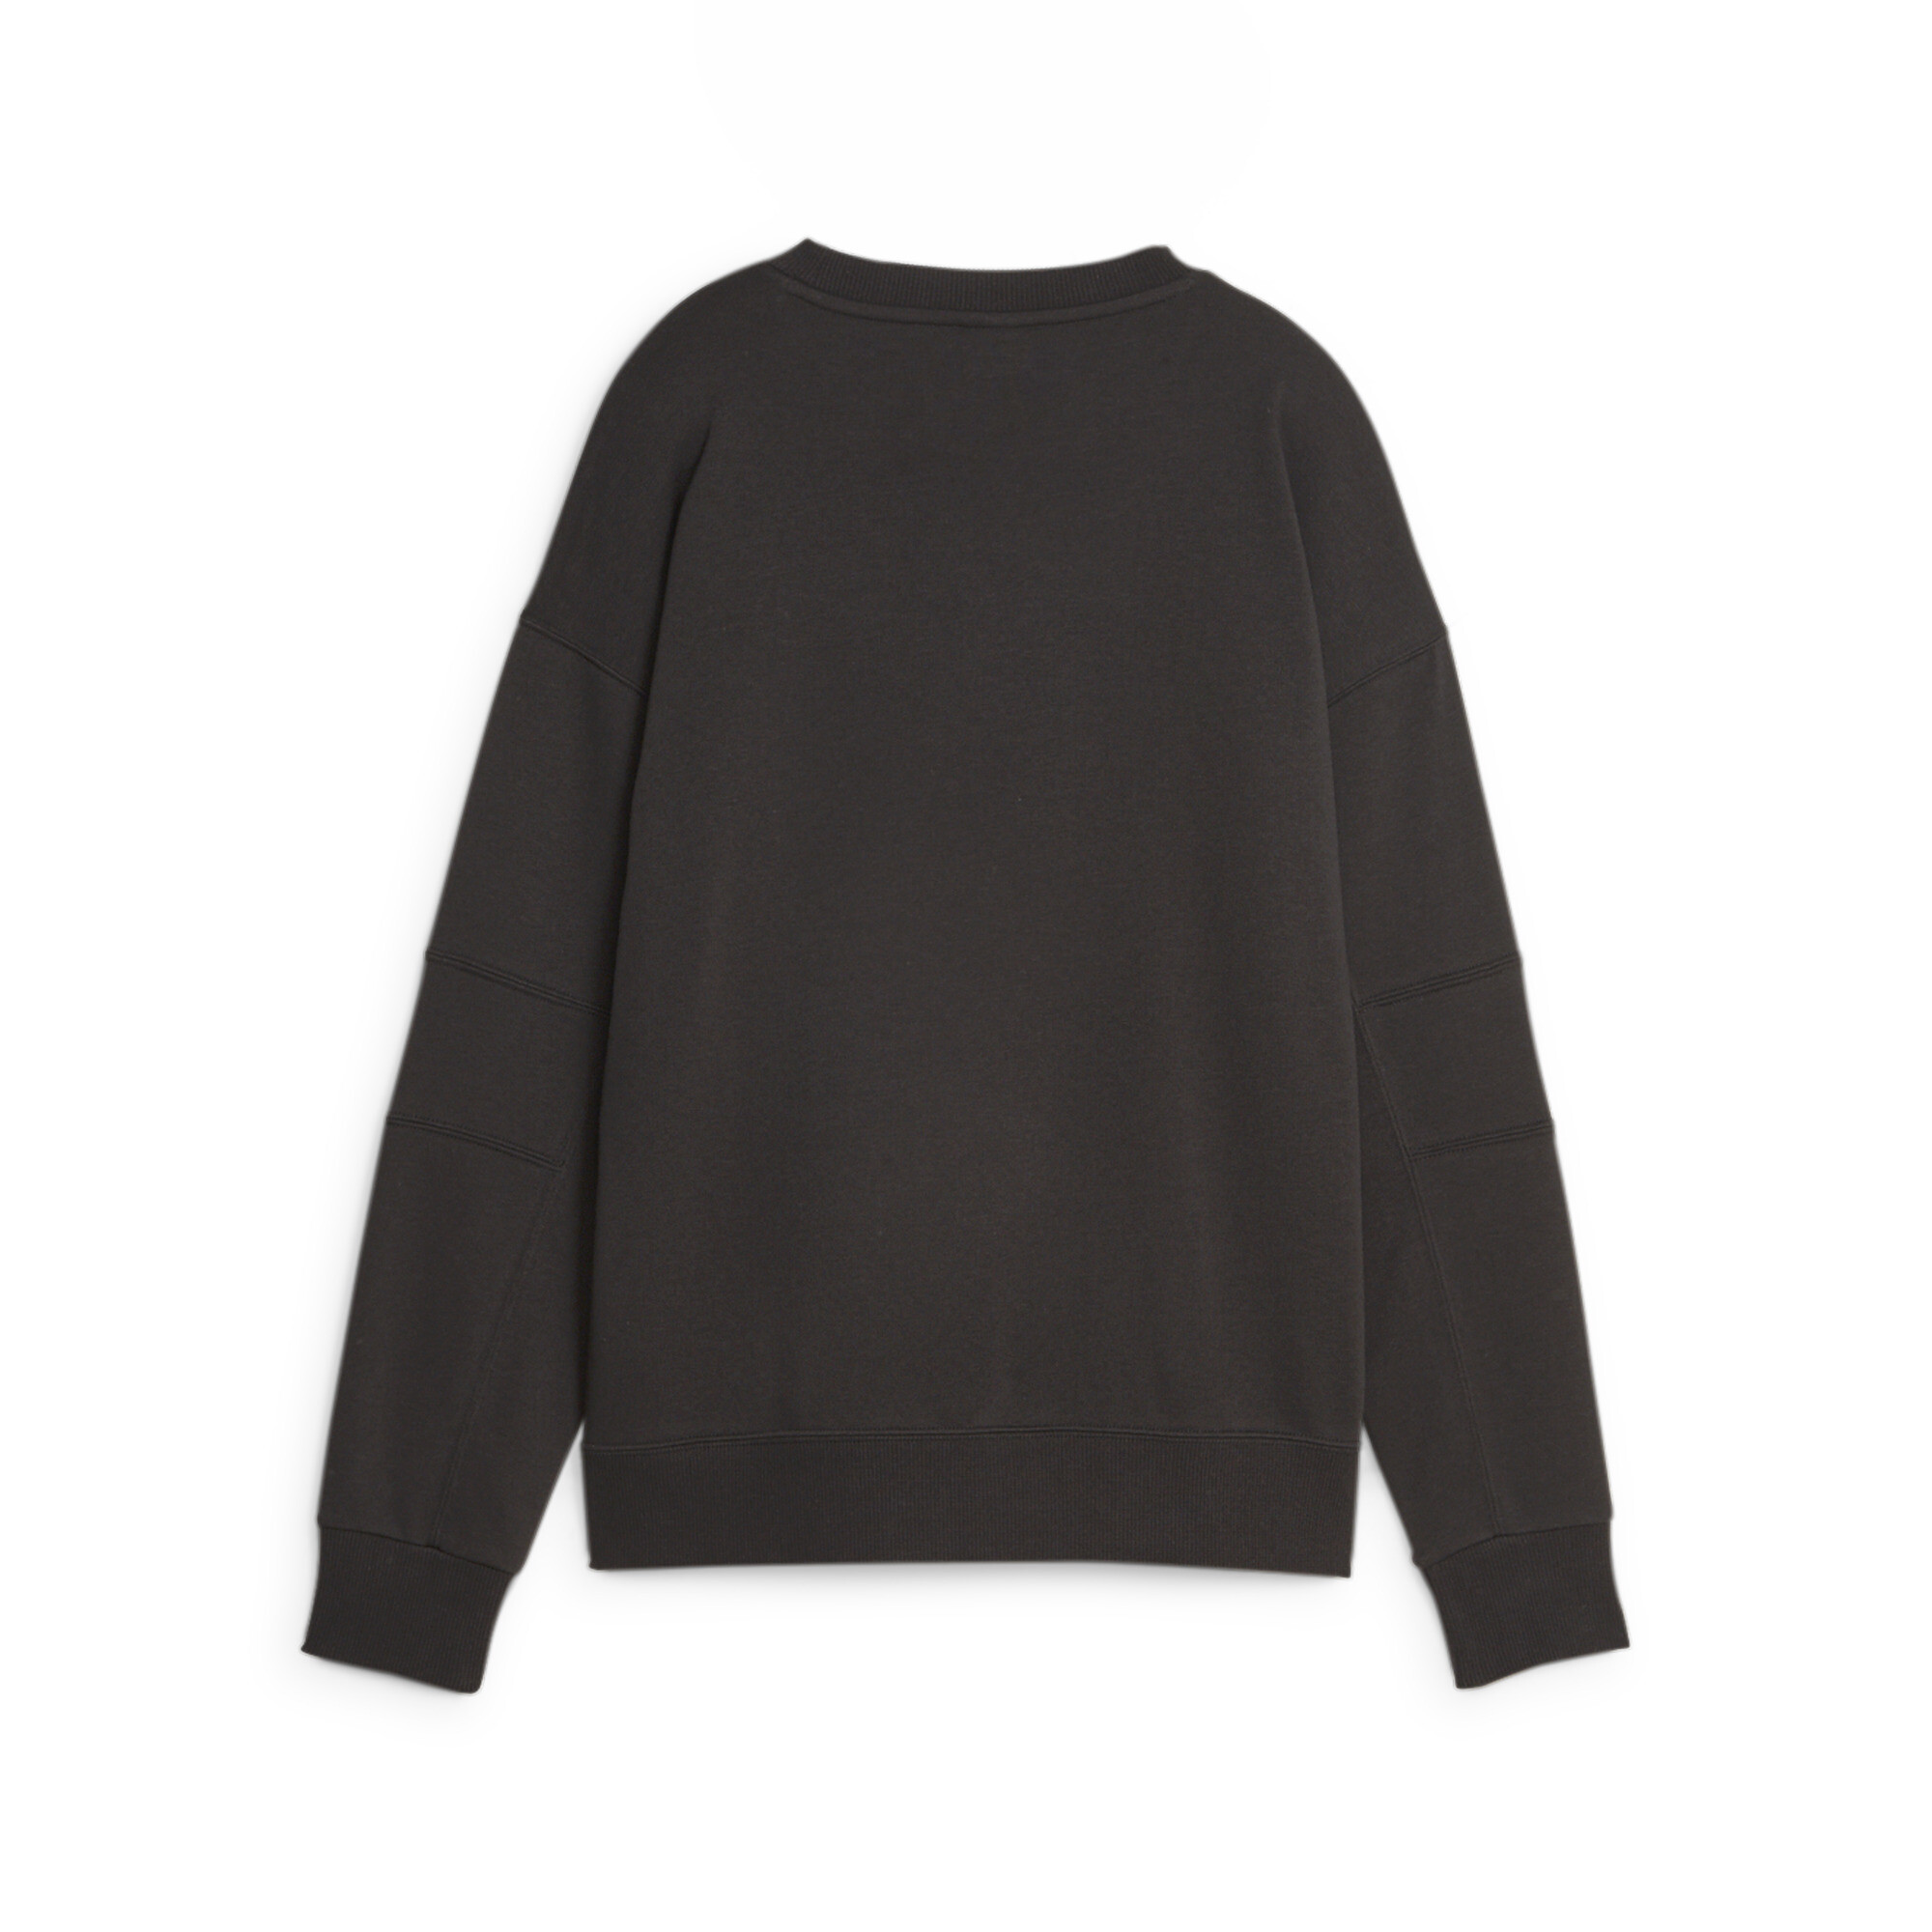 Women's PUMA TEAM Sweatshirt In Black, Size Small